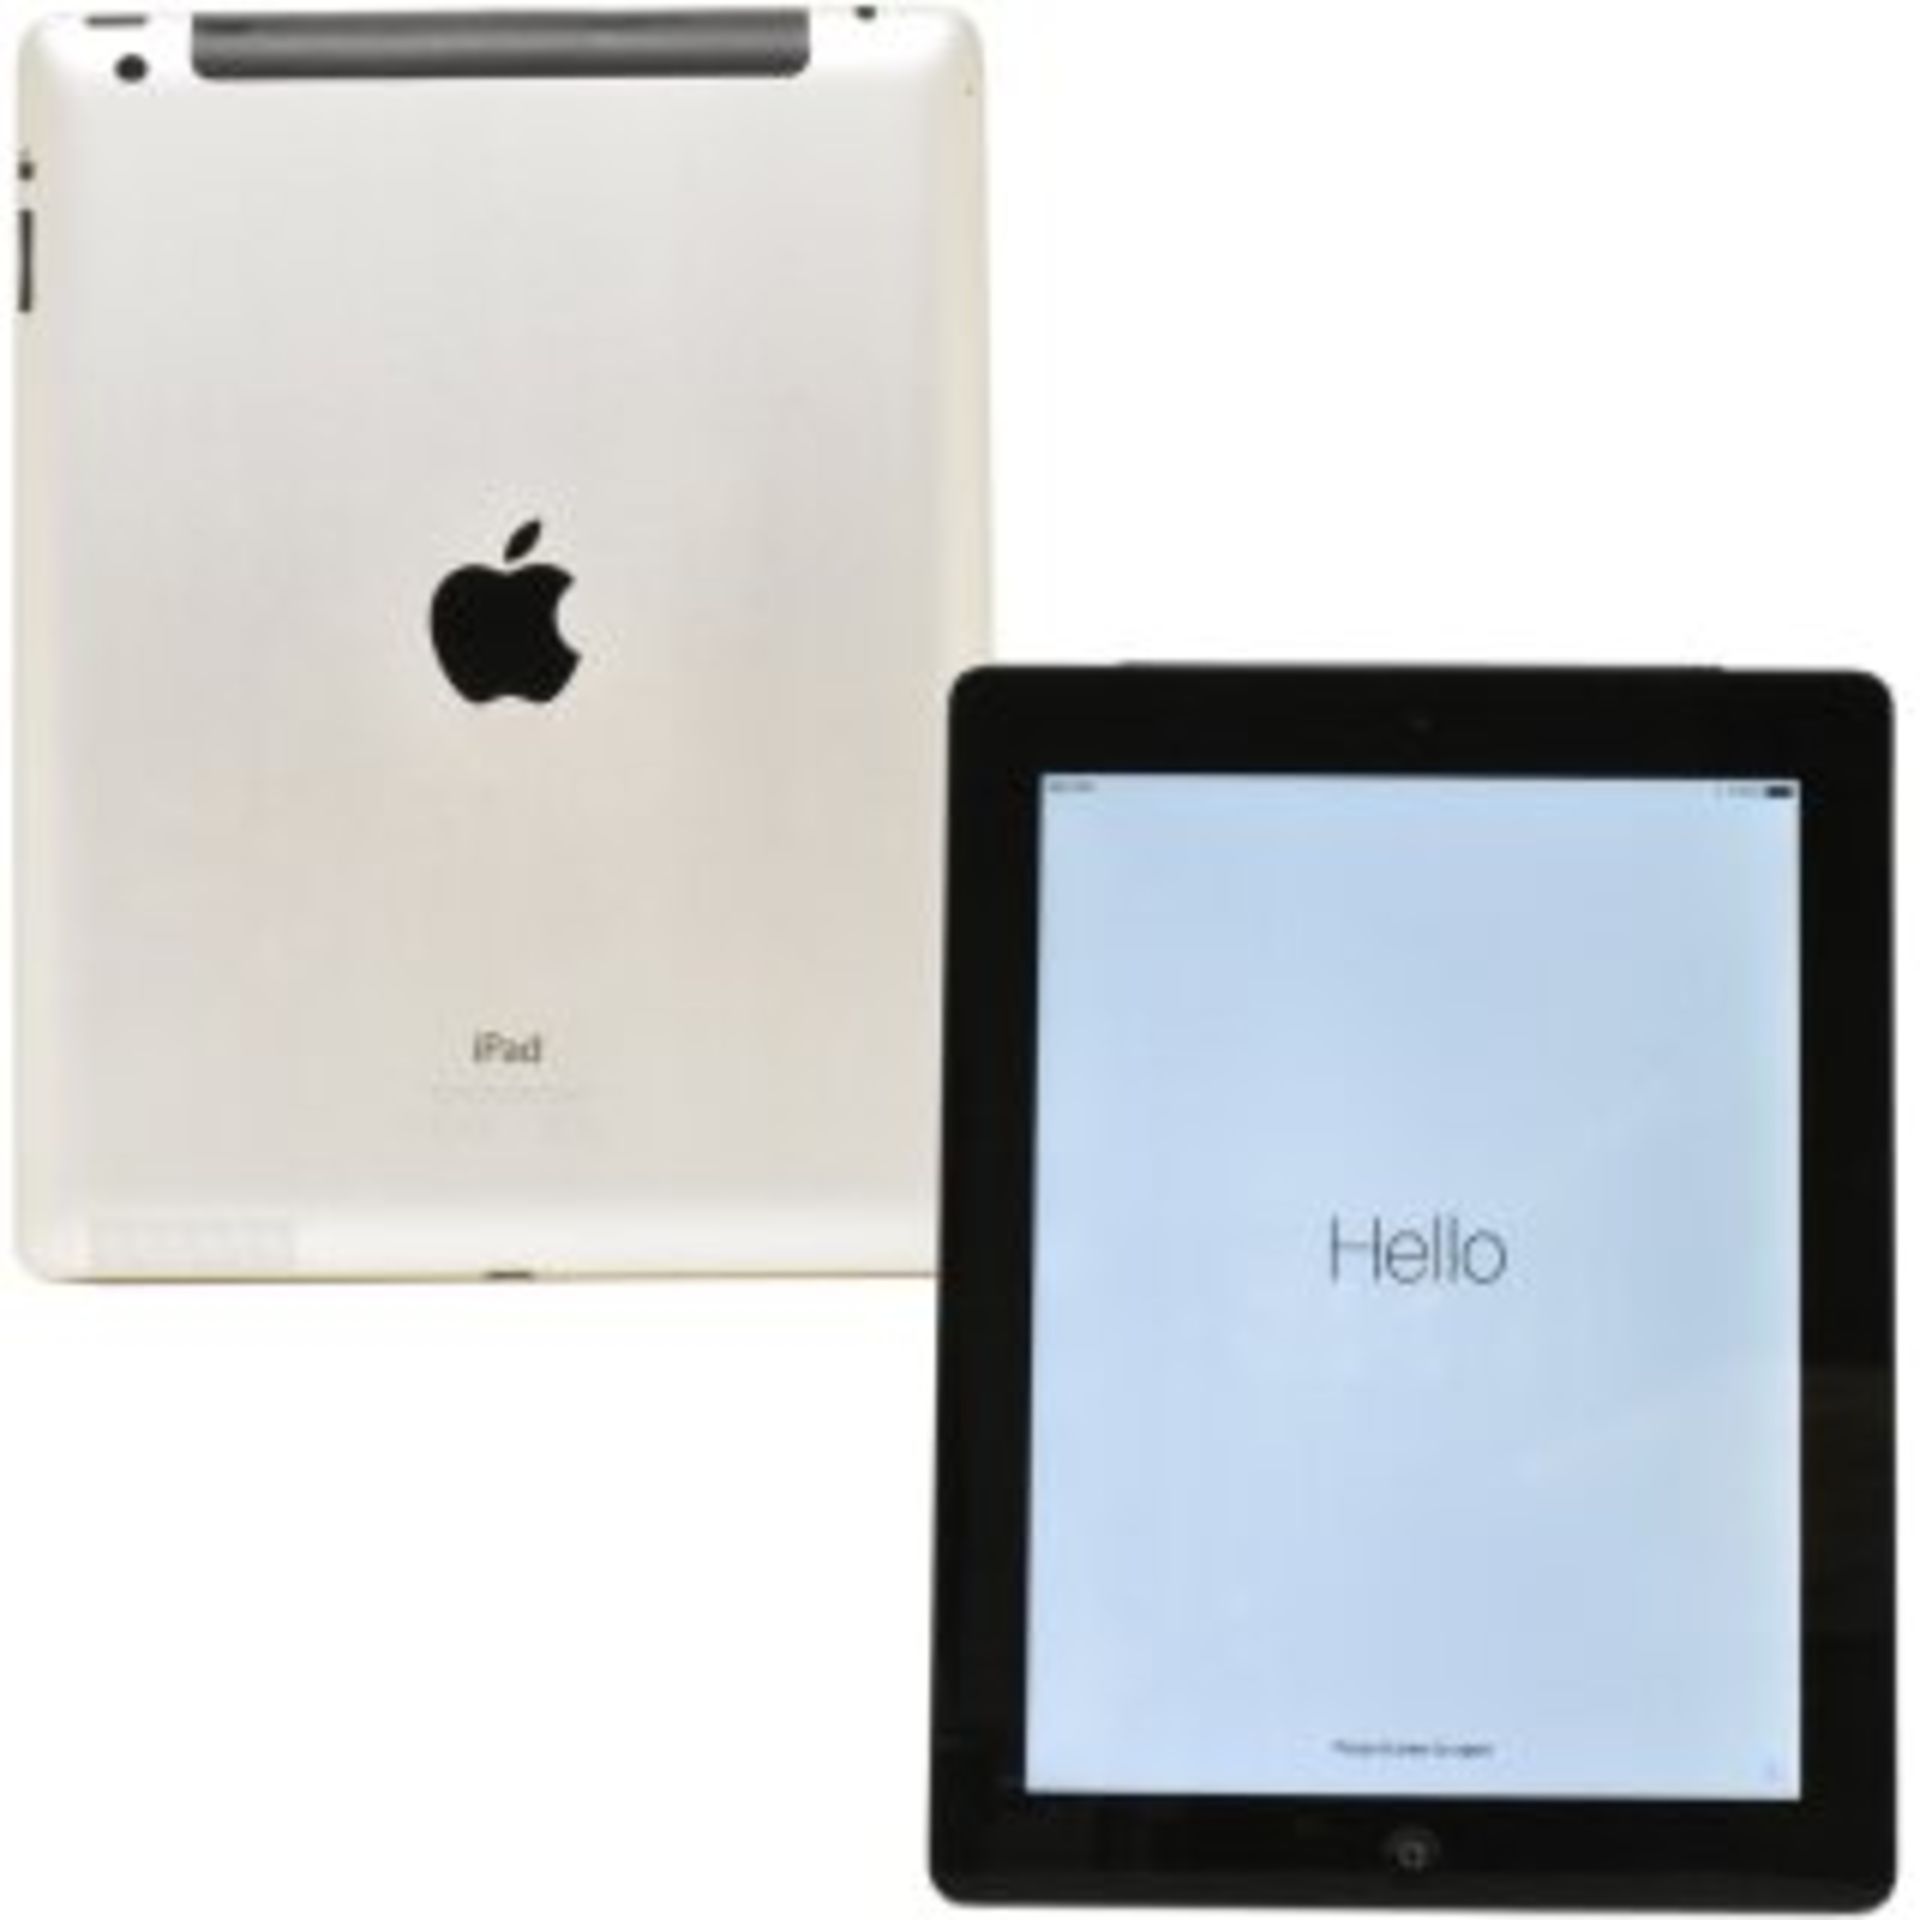 Apple iPad 4th Gen 16GB WiFi Black & Silver